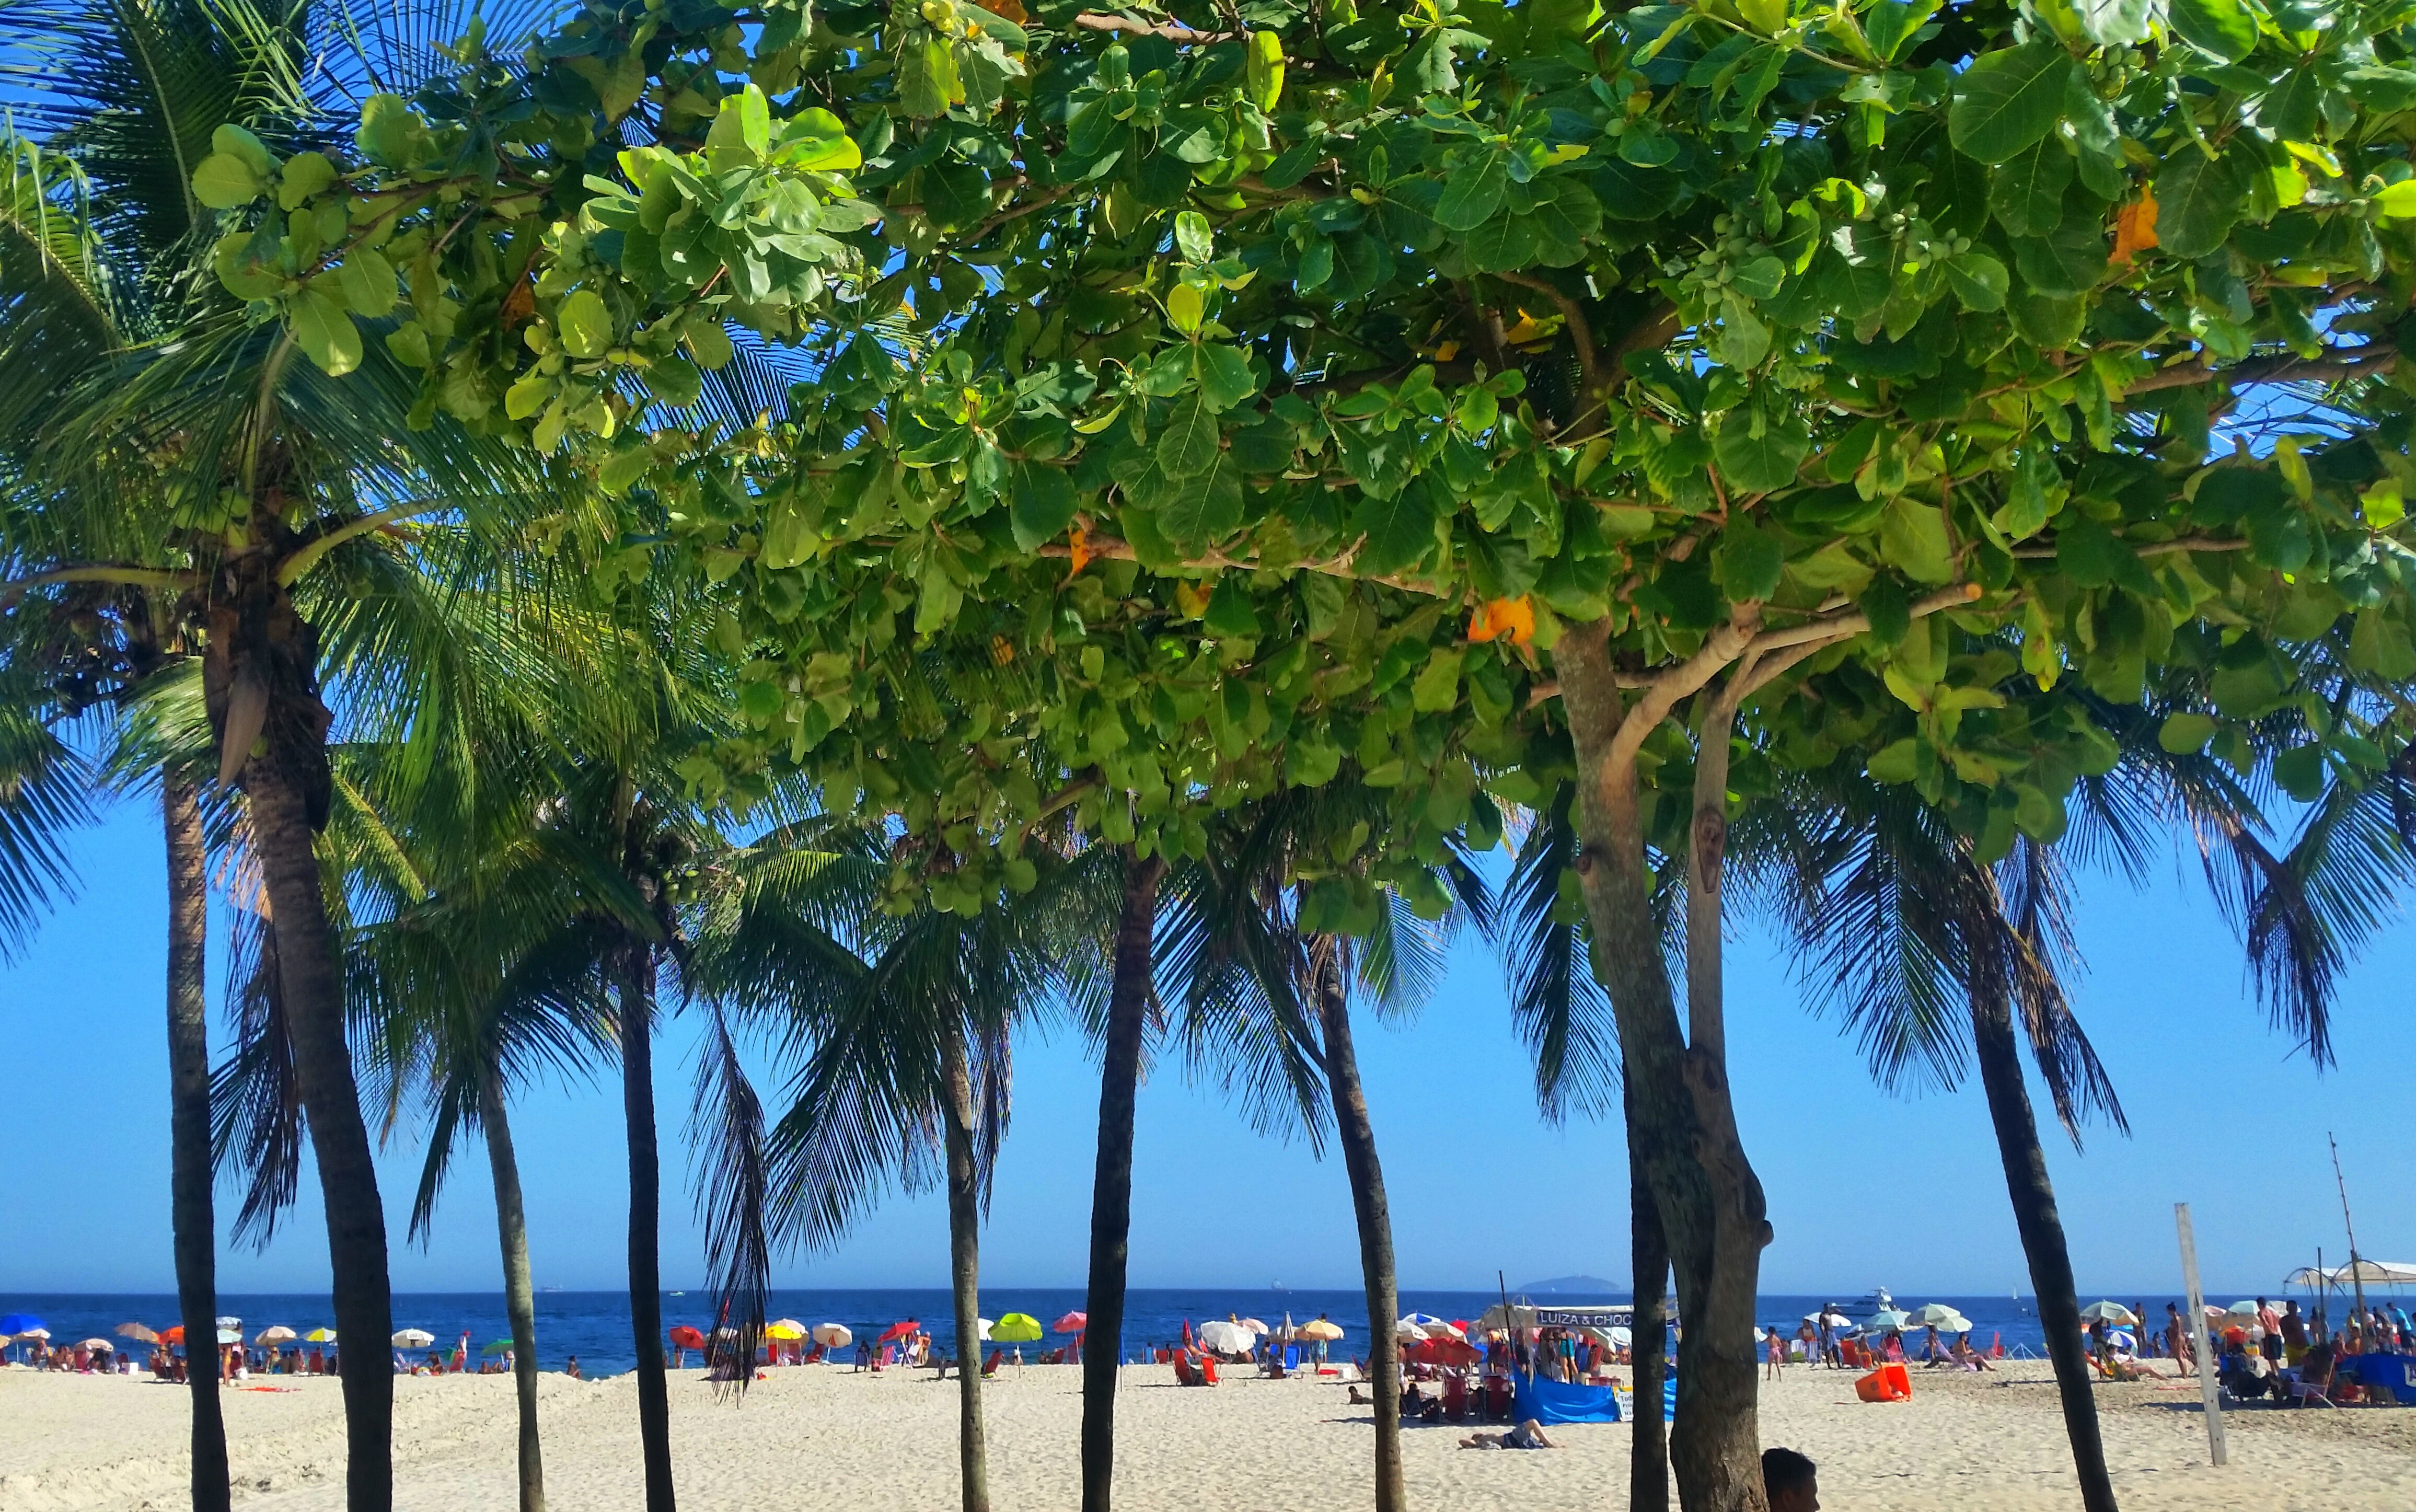 Paradise: Palm trees and colourful umbrellas at Copacabana Beach, Rio de Janaeiro